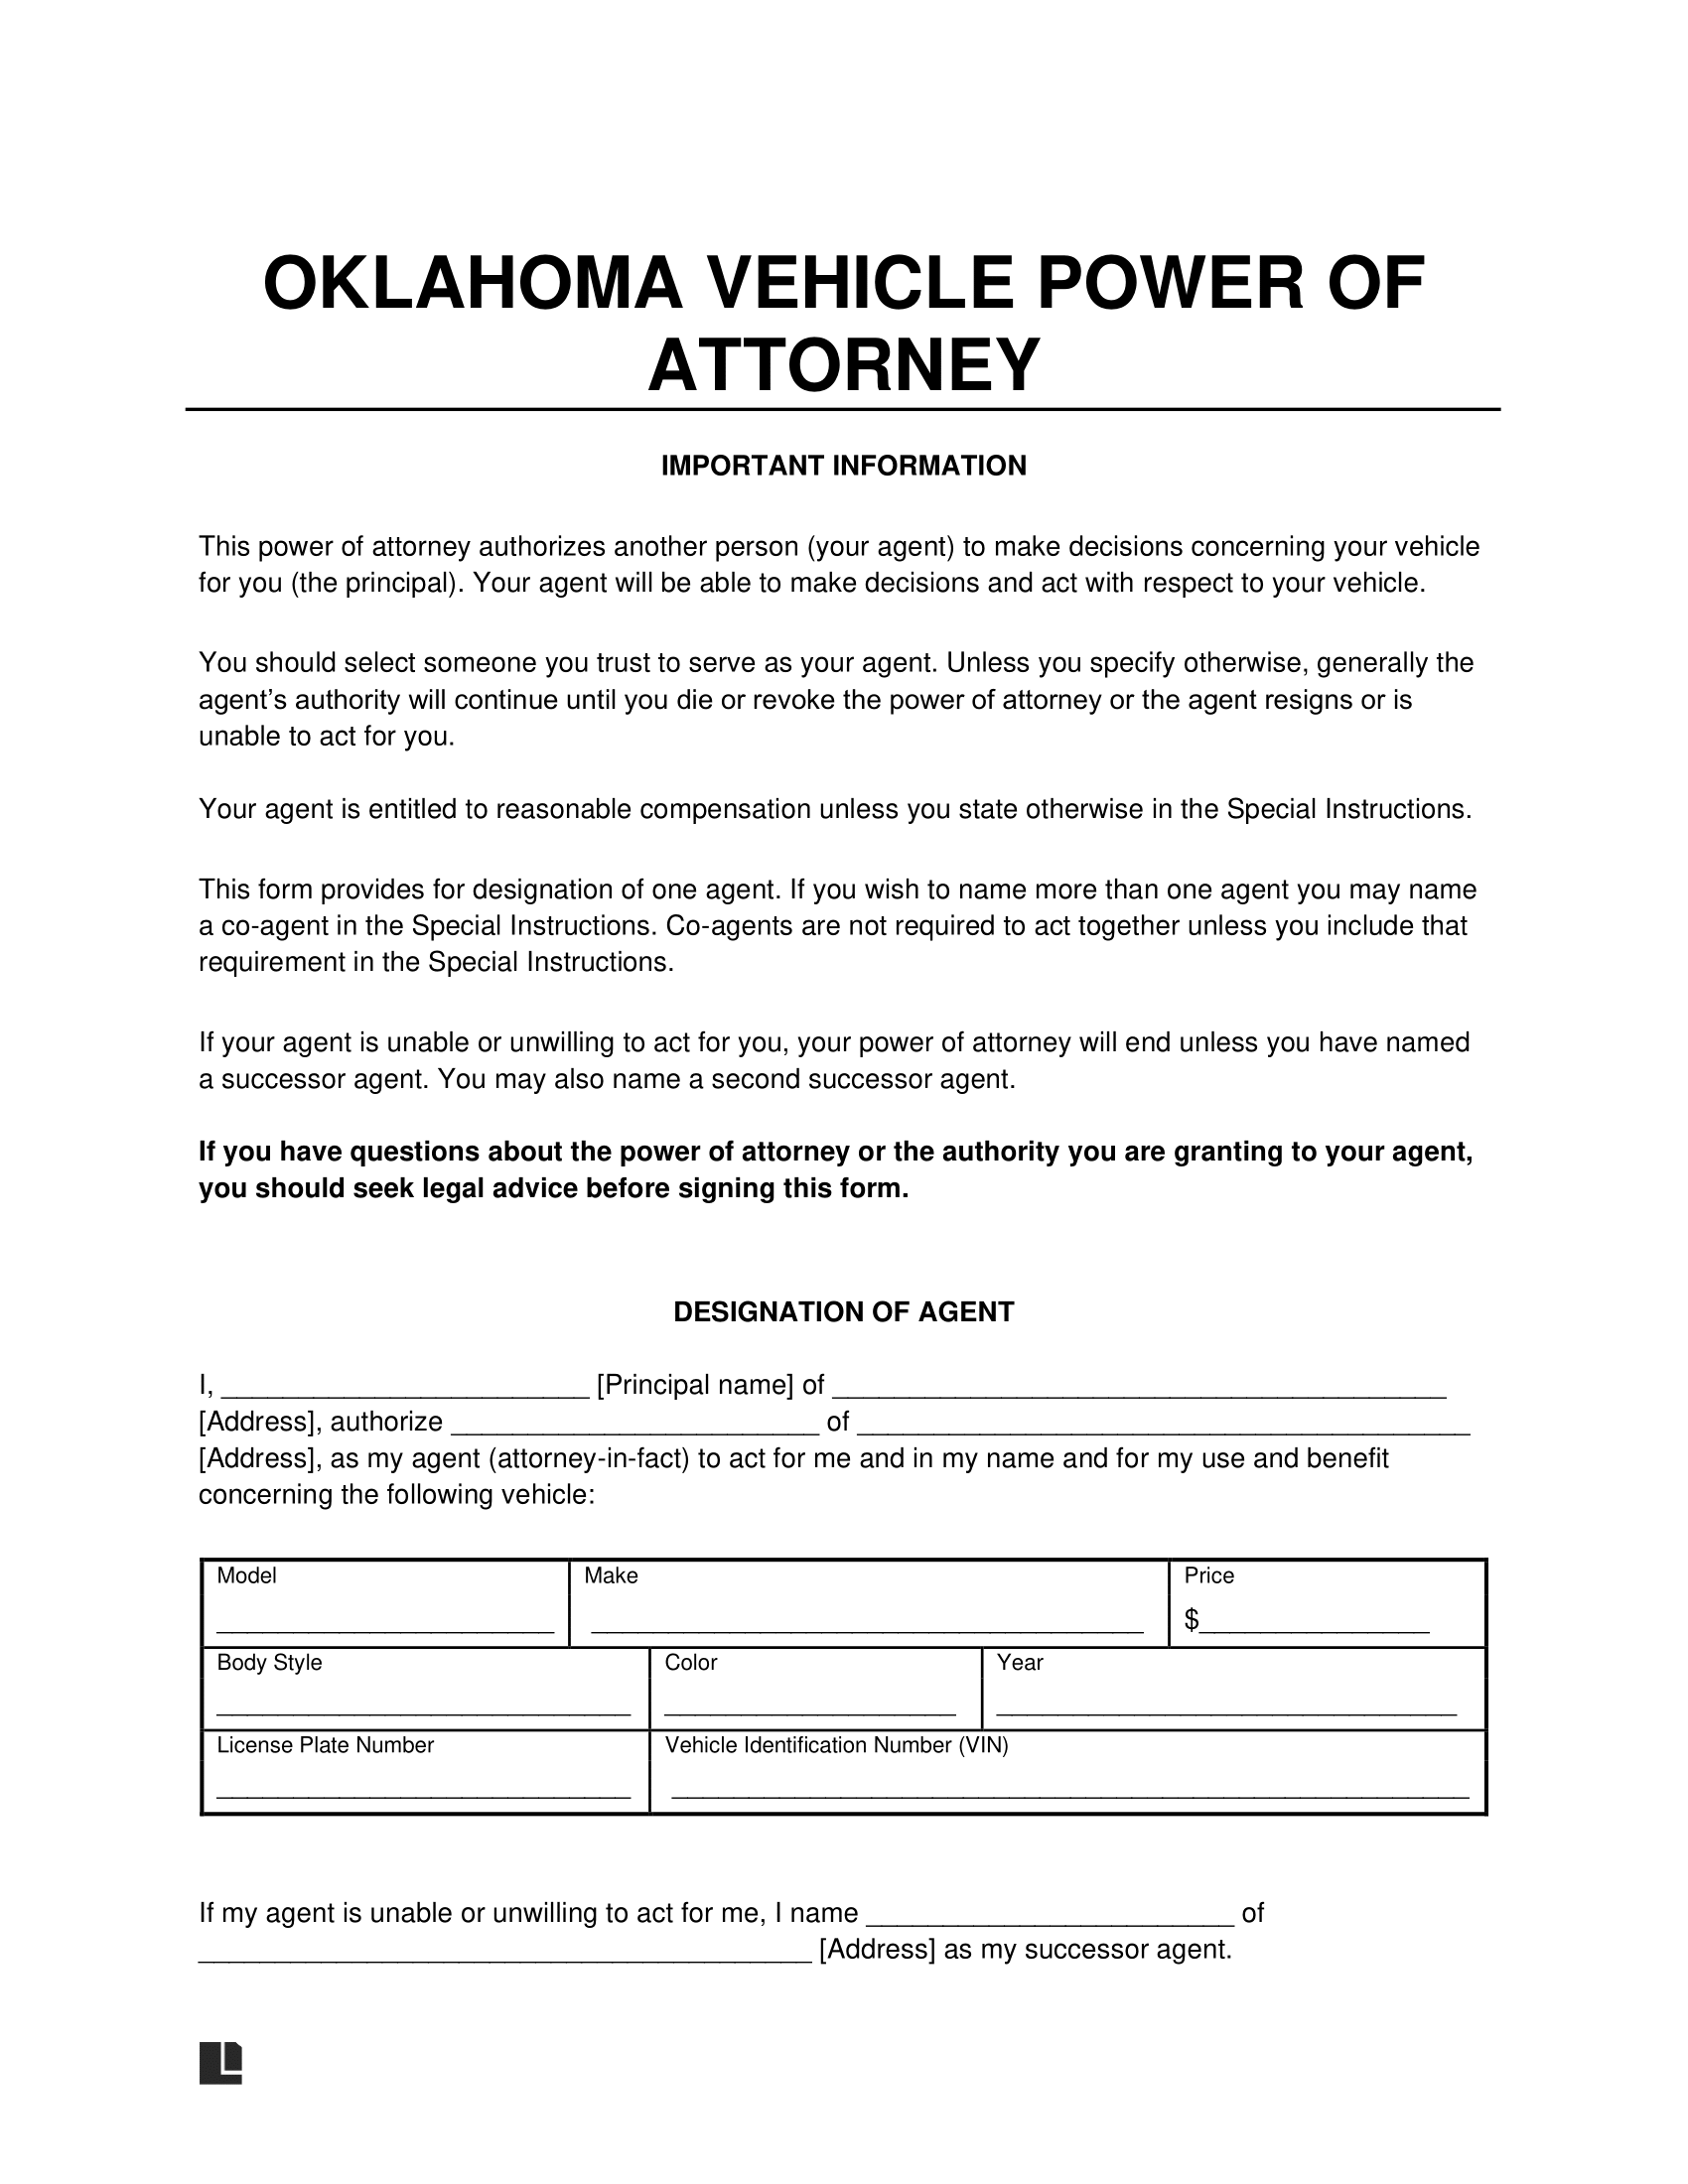 Oklahoma Motor Vehicle Power of Attorney Form